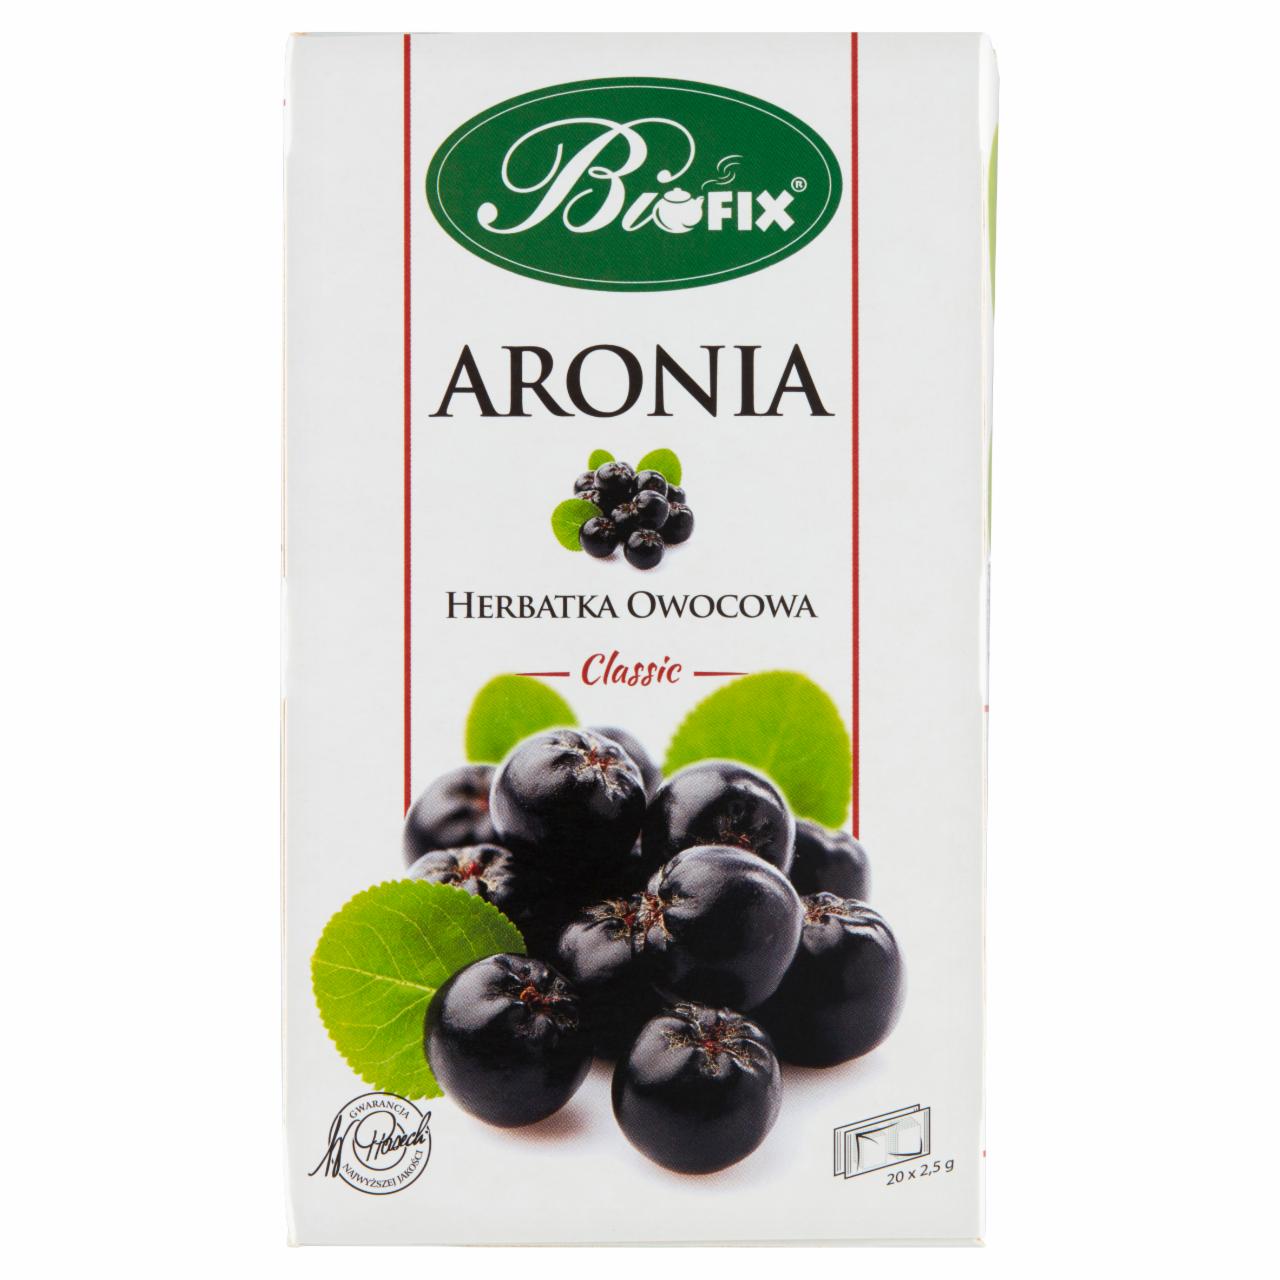 Photo - Bifix Classic Aronia Fruit Tea 50 g (20 x 2.5 g)